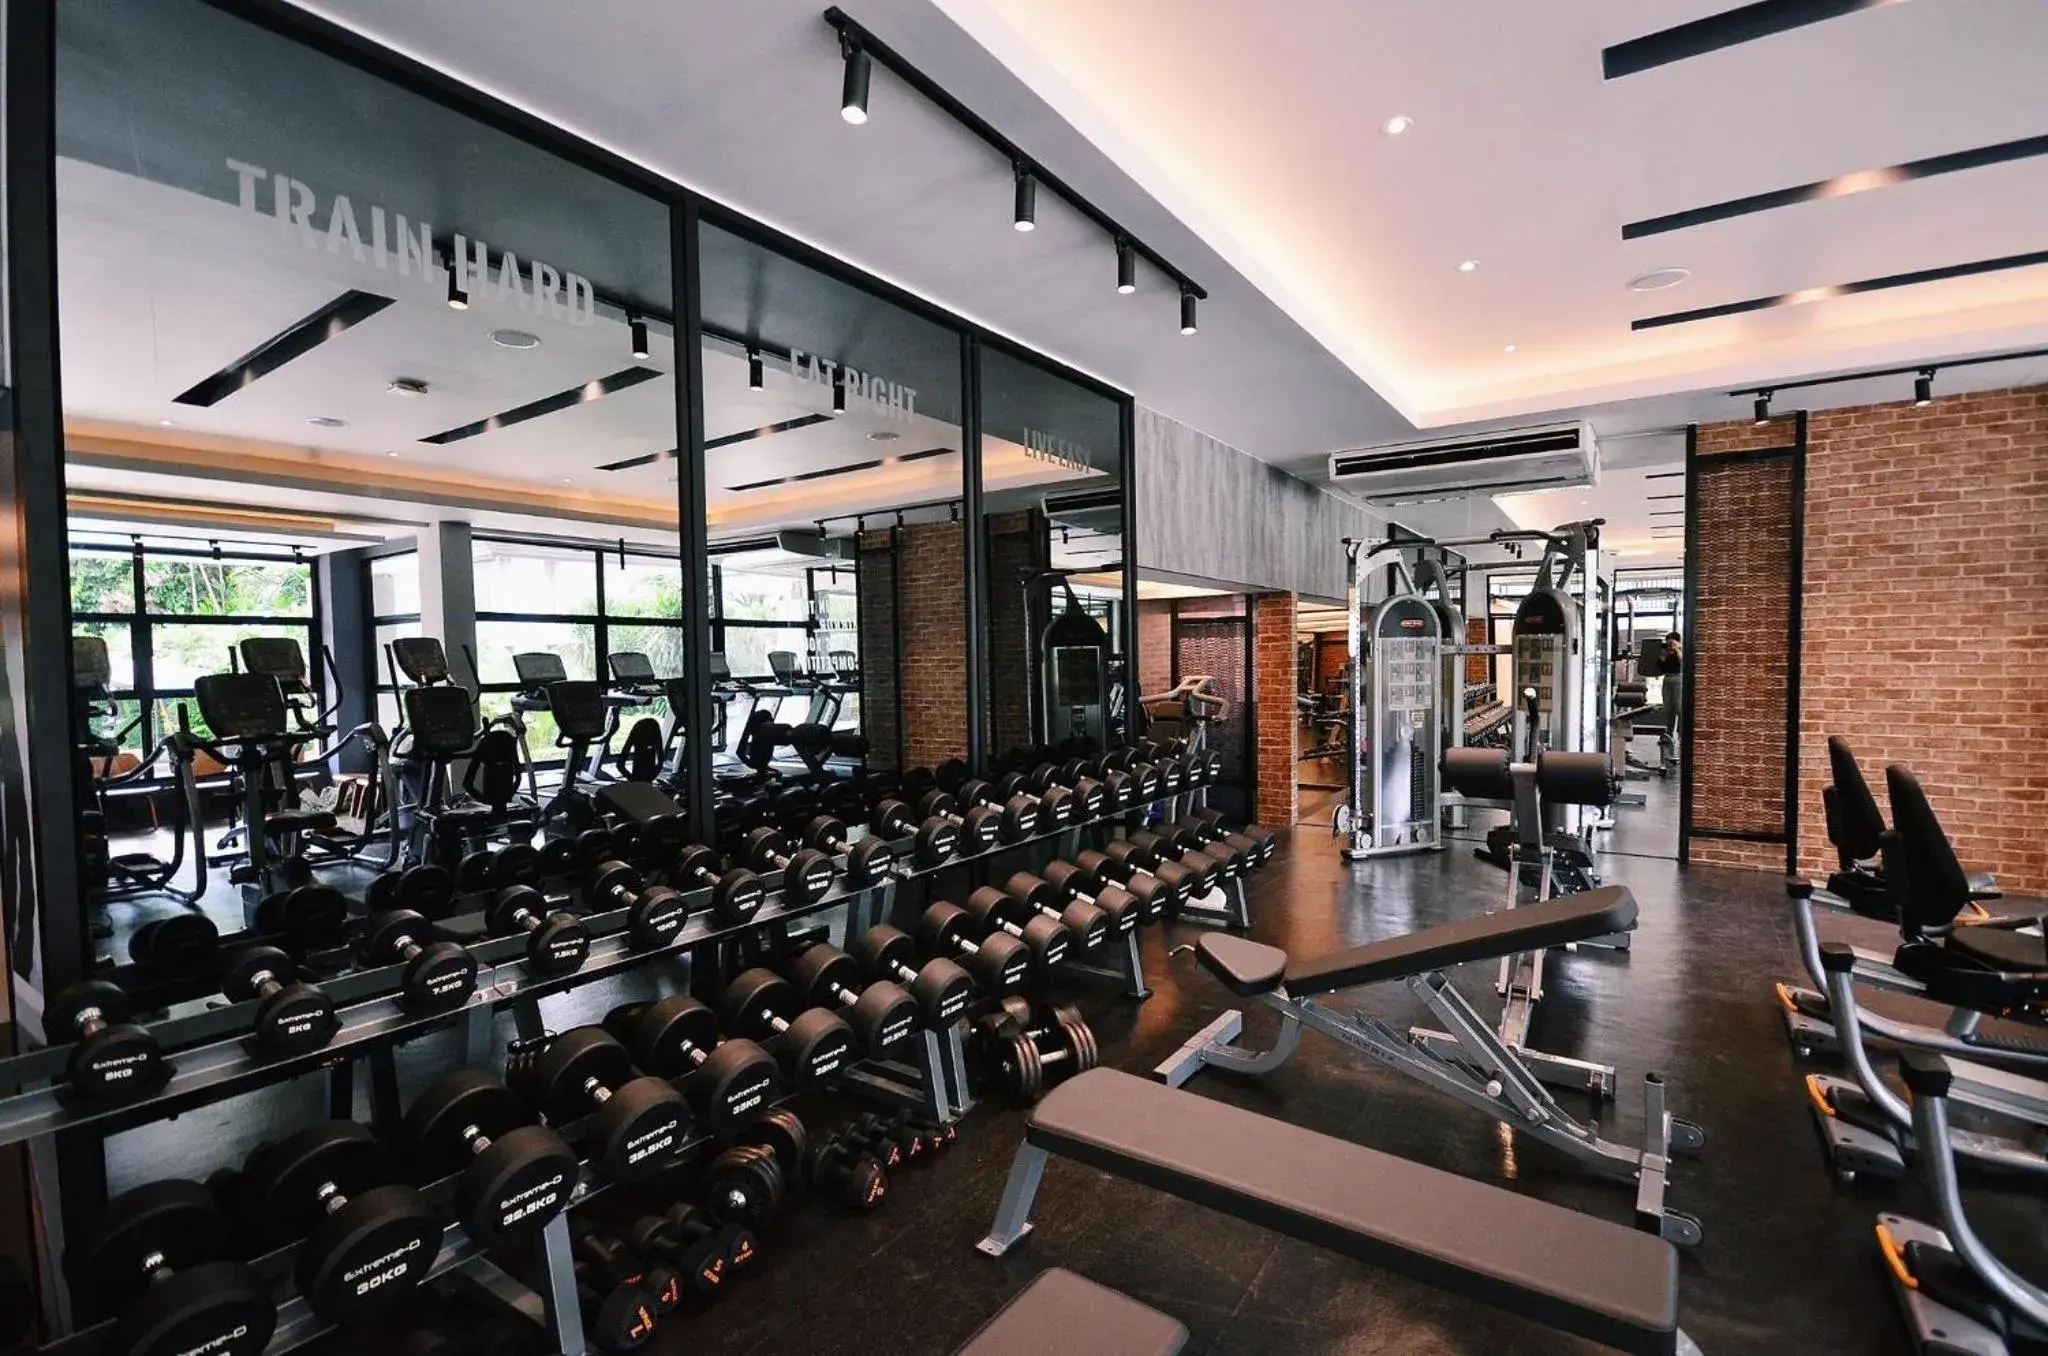 Fitness centre/facilities, Fitness Center/Facilities in SC Park Hotel